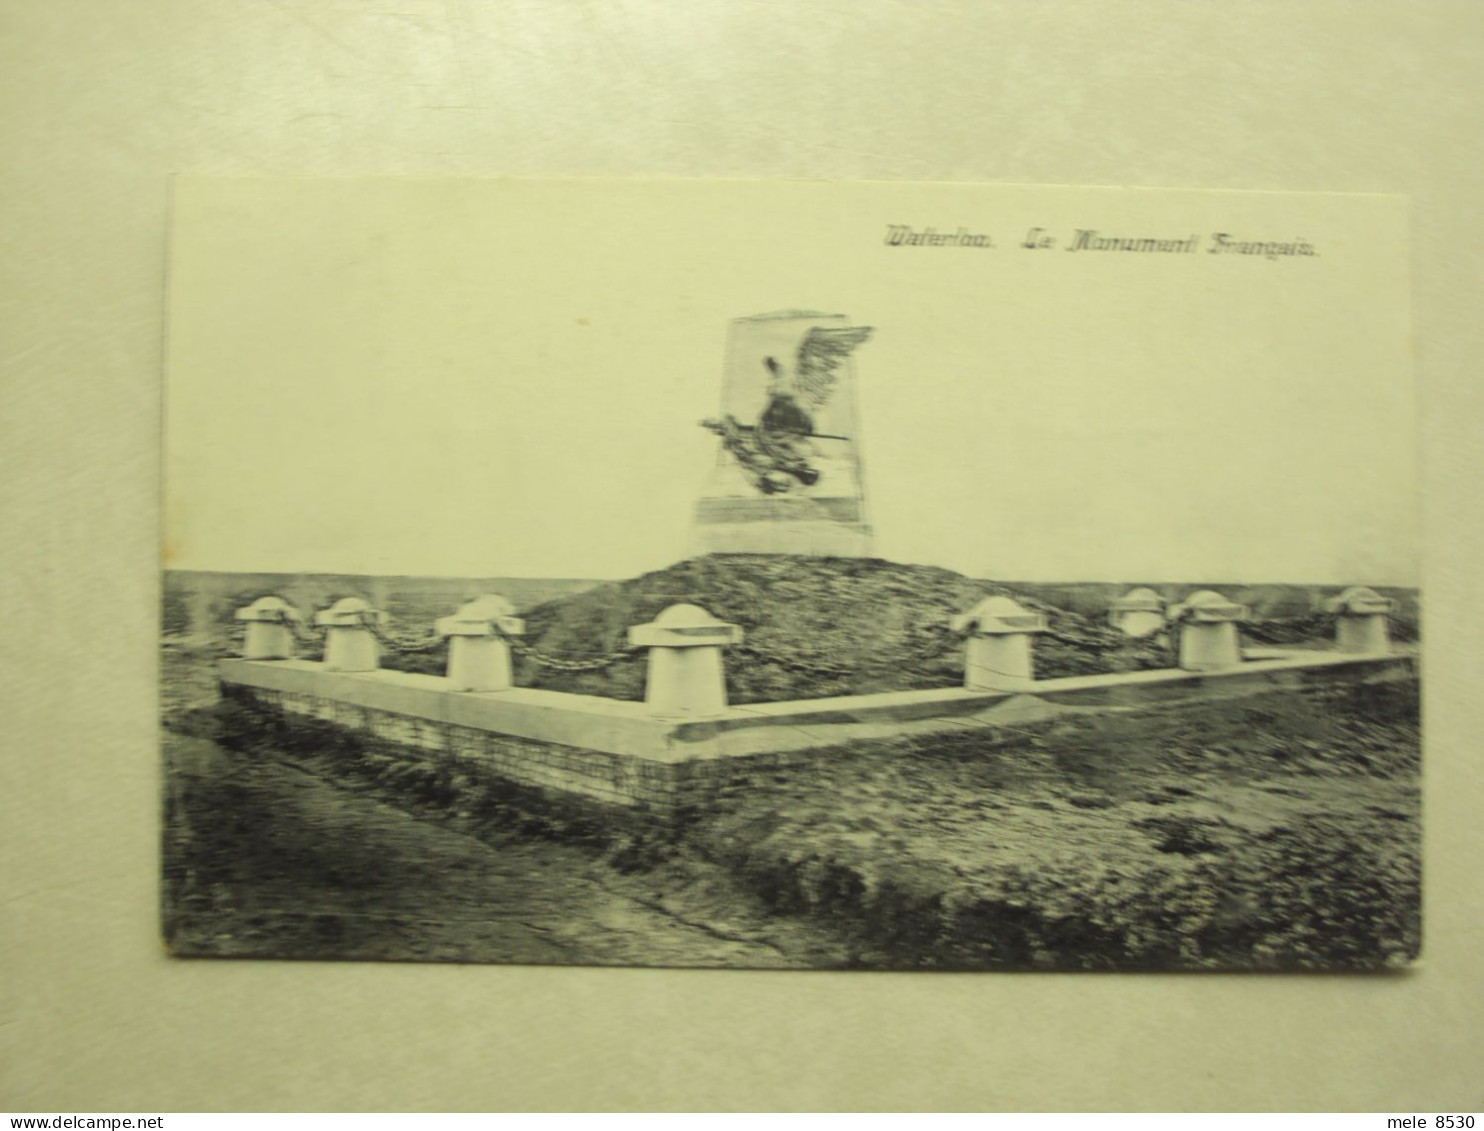 48955 - WATERLOO - LE MONUMENT FRANCAIS - ZIE 2 FOTO'S - Waterloo